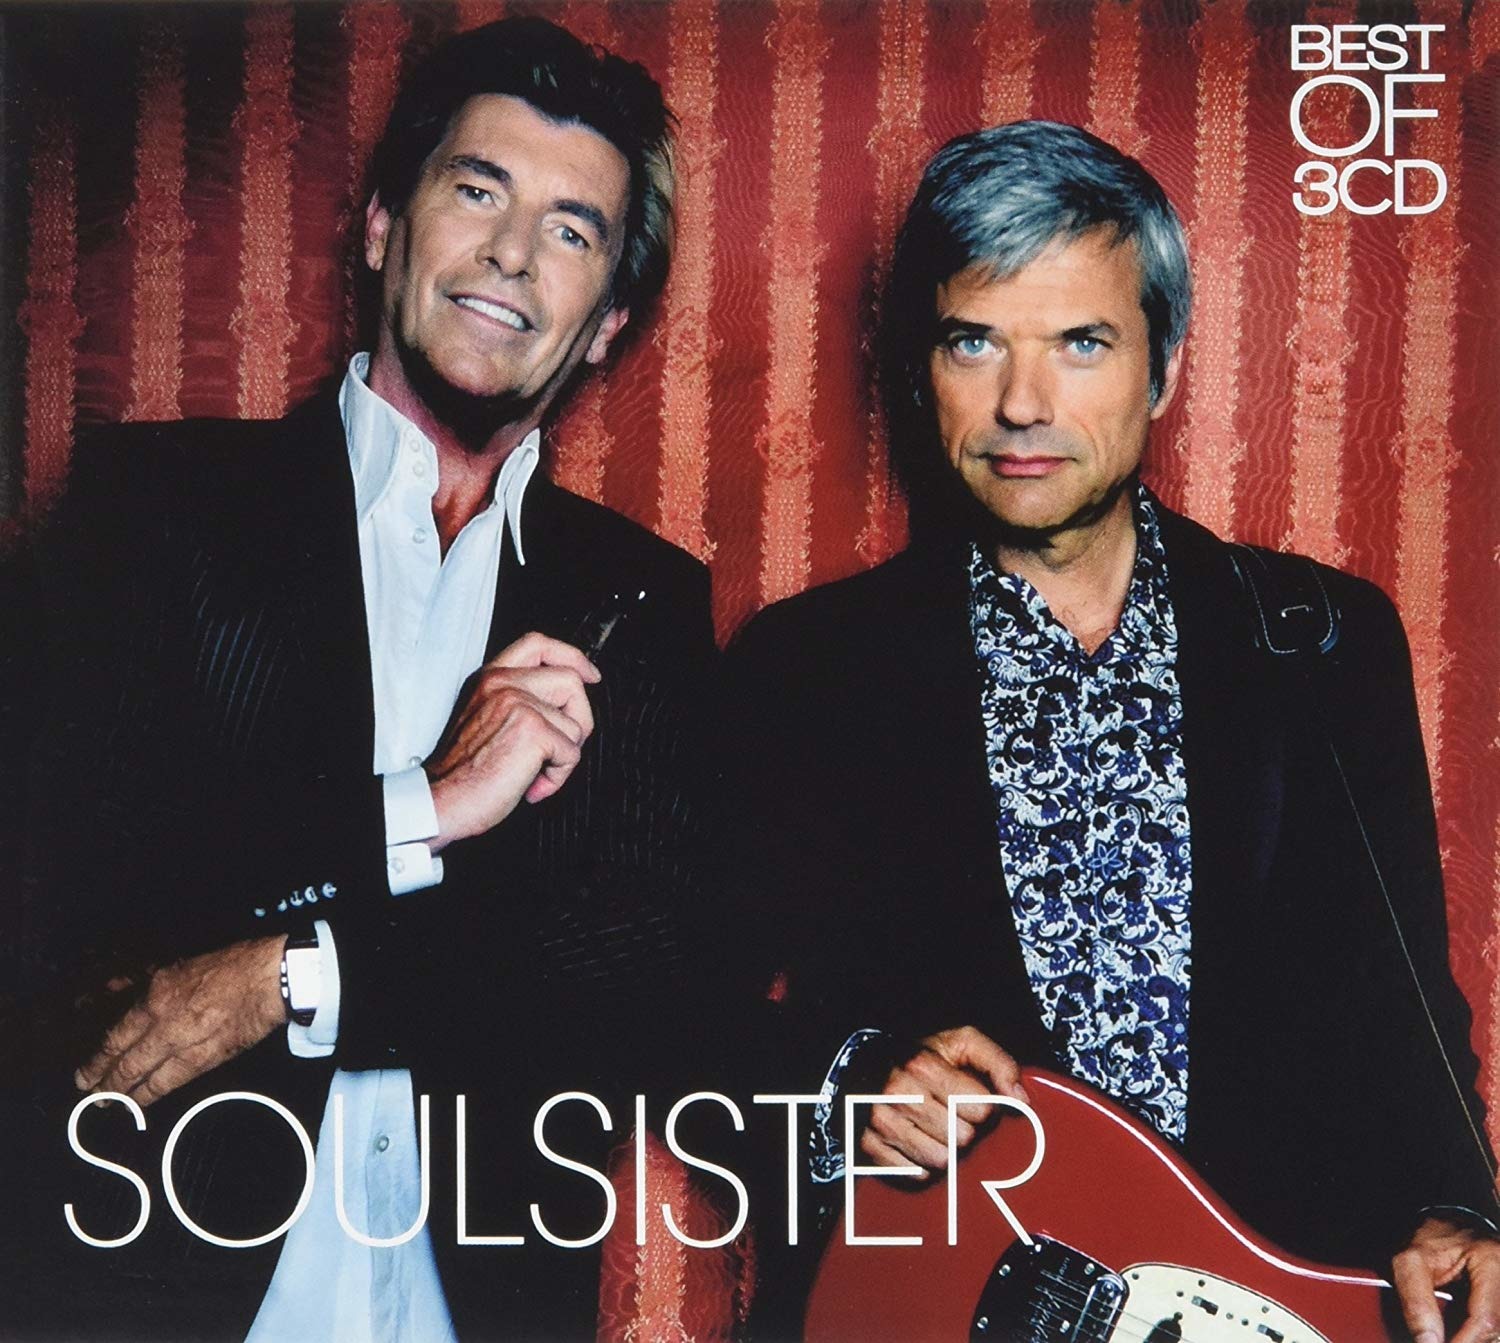 SOULSISTER - BEST OF, CD